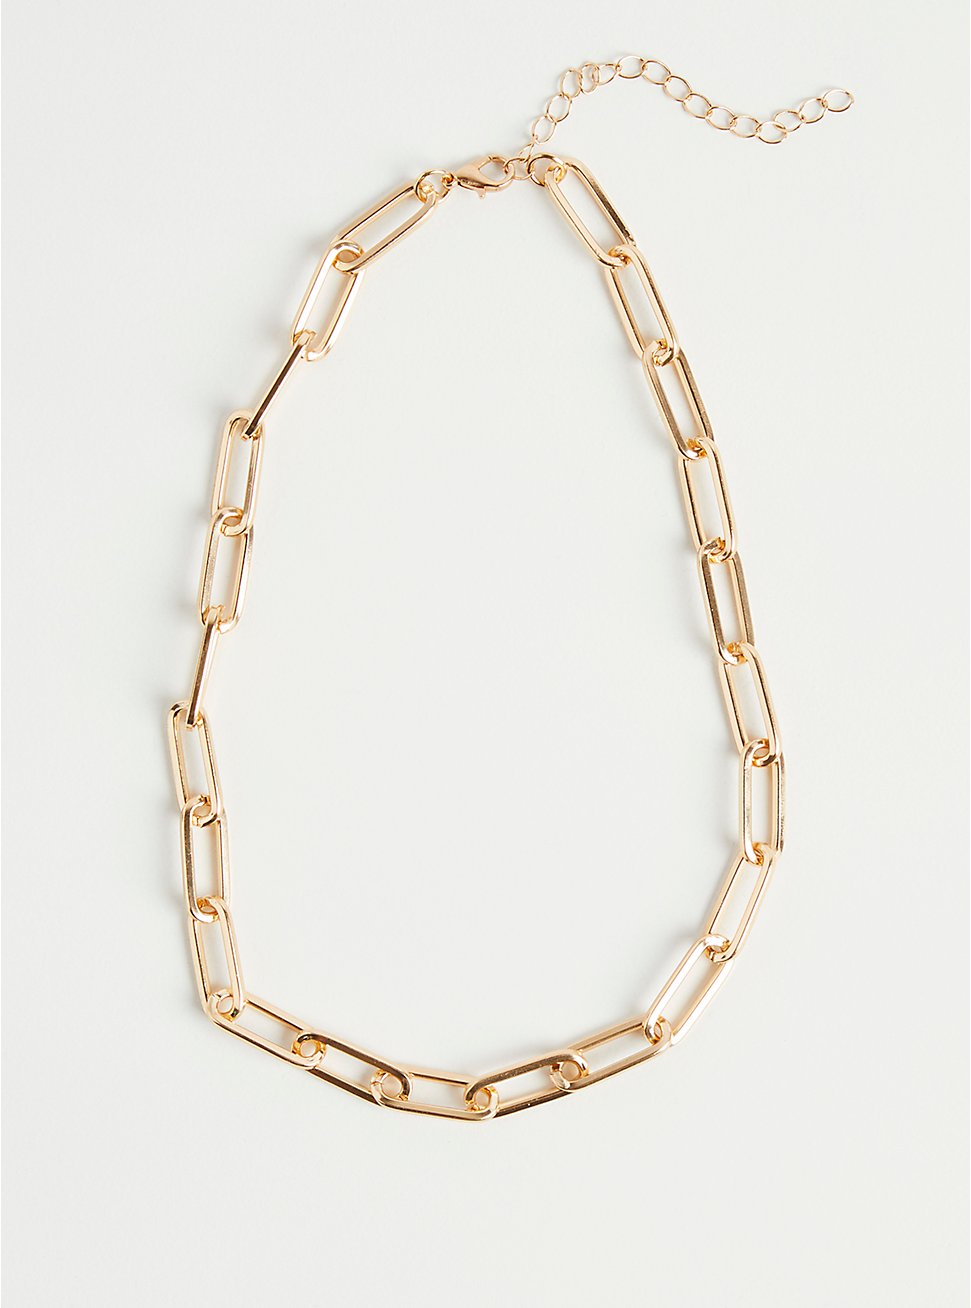 Paper Clip Single Necklace - Gold Tone, , hi-res